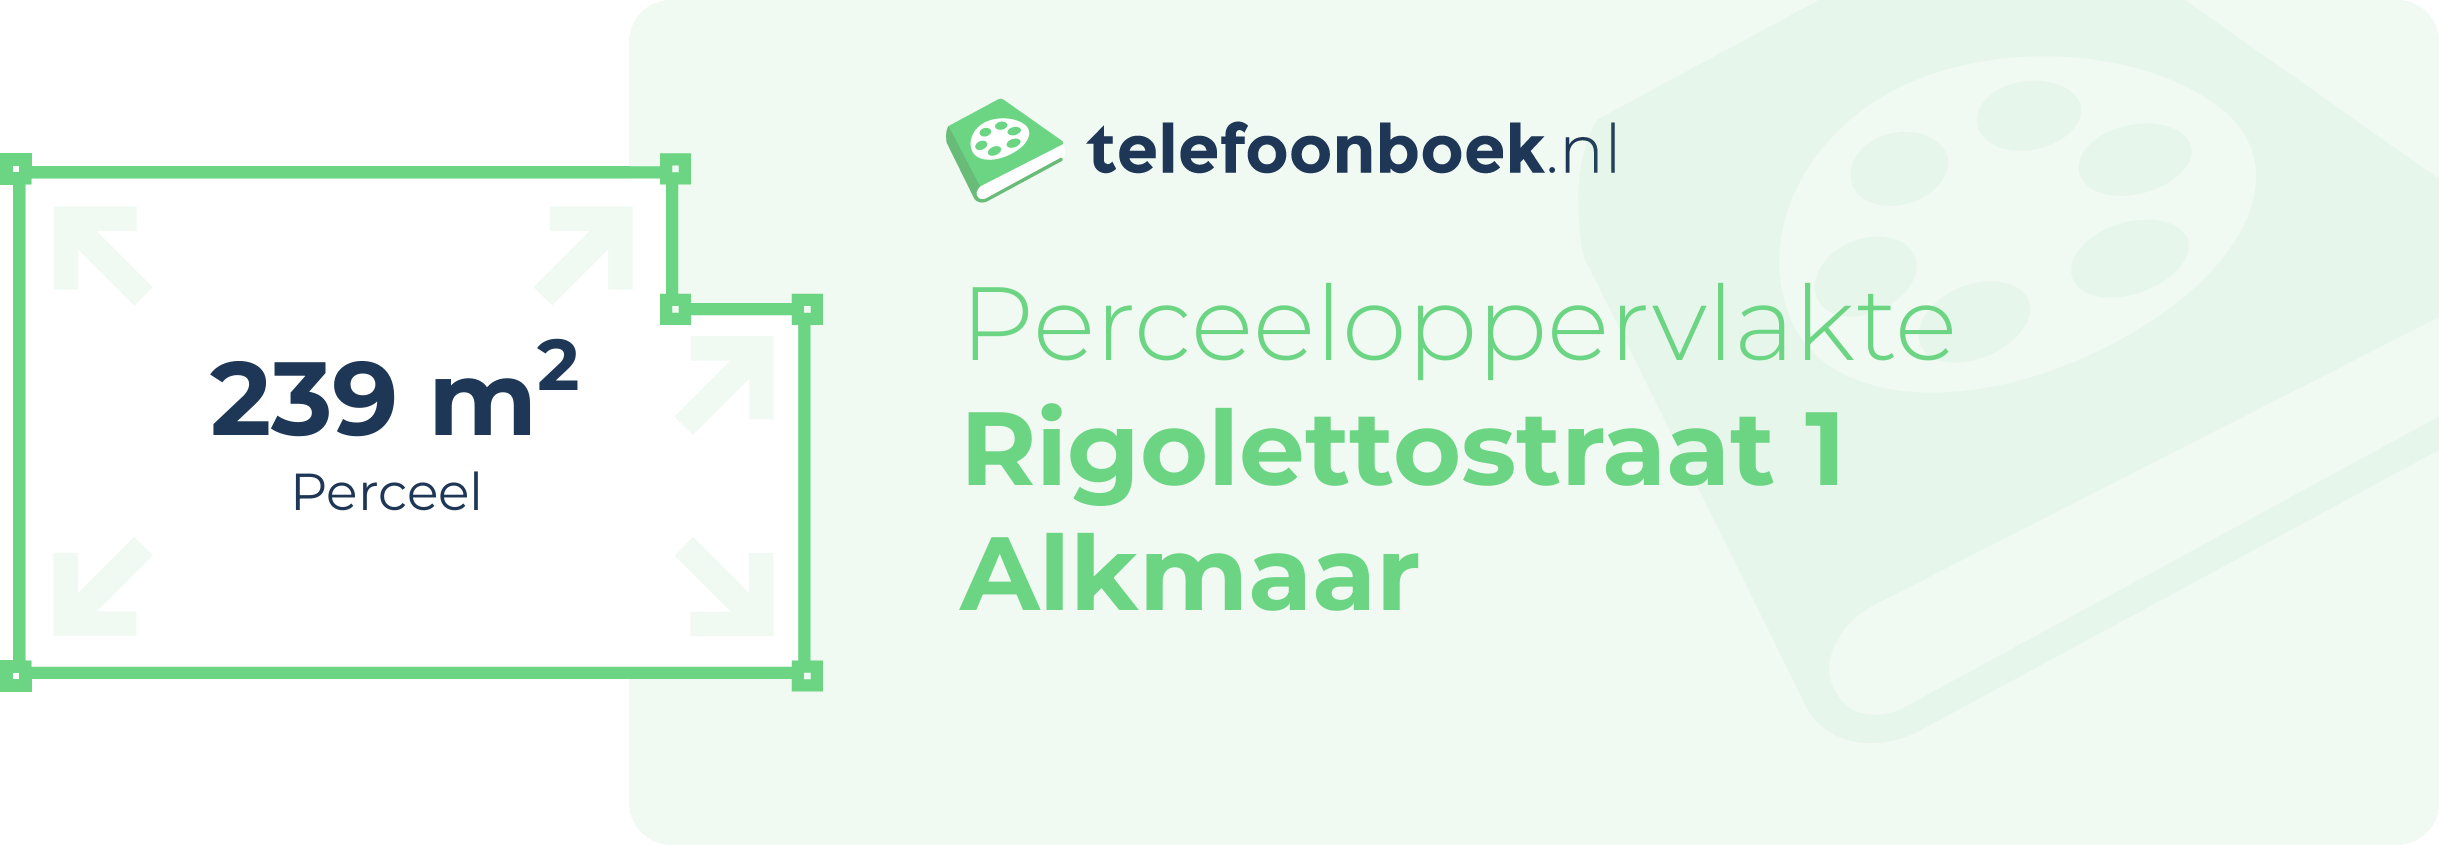 Perceeloppervlakte Rigolettostraat 1 Alkmaar